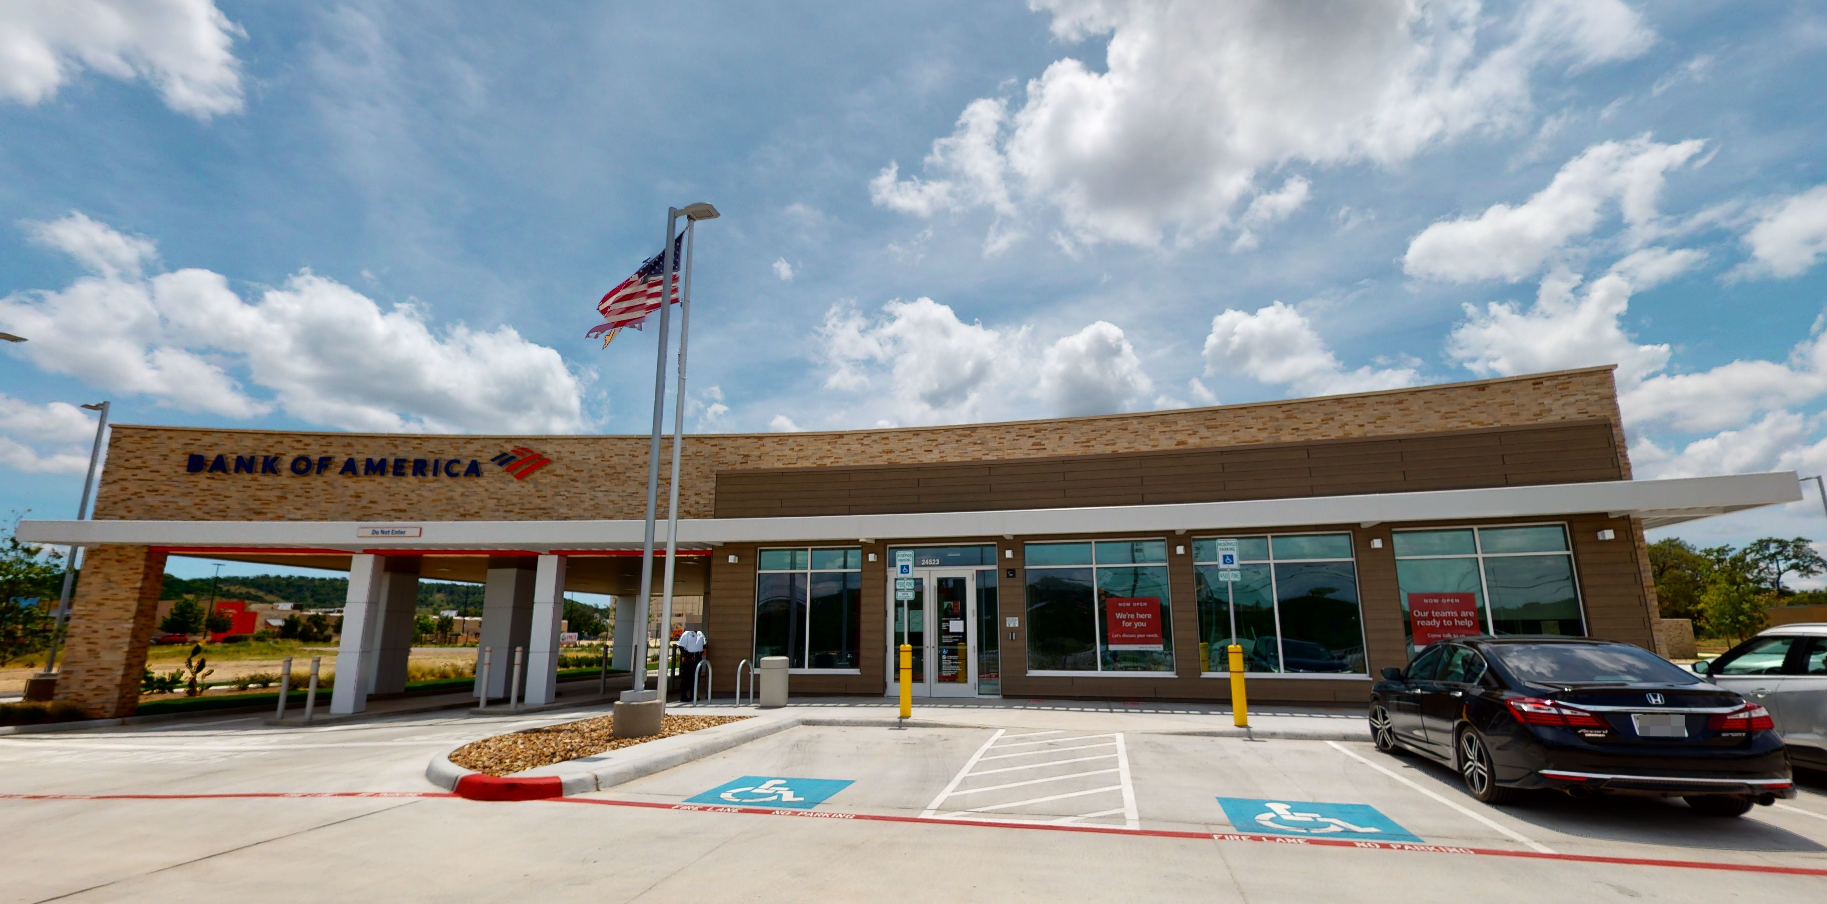 Bank of America financial center with drive-thru ATM | 24523 W Interstate 10, San Antonio, TX 78257